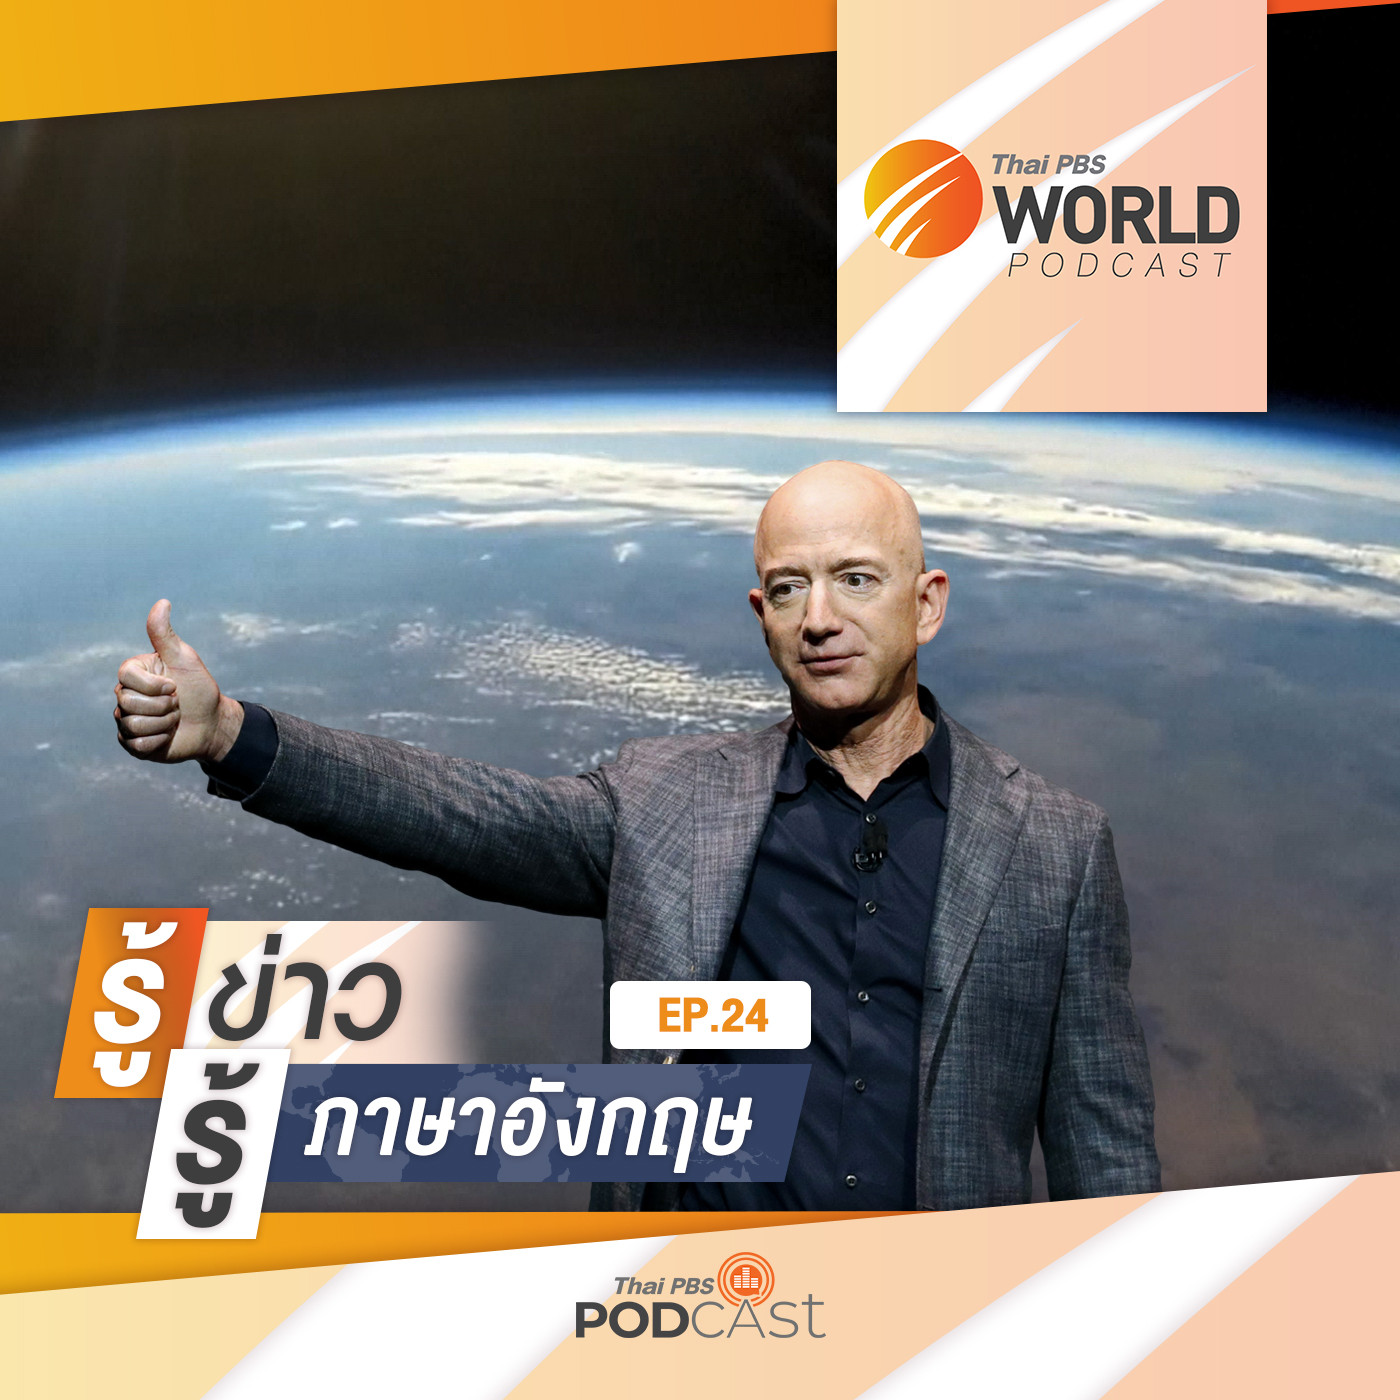 Thai PBS World Podcast - รู้ข่าว รู้ภาษาอังกฤษ EP. 24: รู้ข่าว รู้ภาษาอังกฤษ - เจฟฟ์ เบโซส กับ